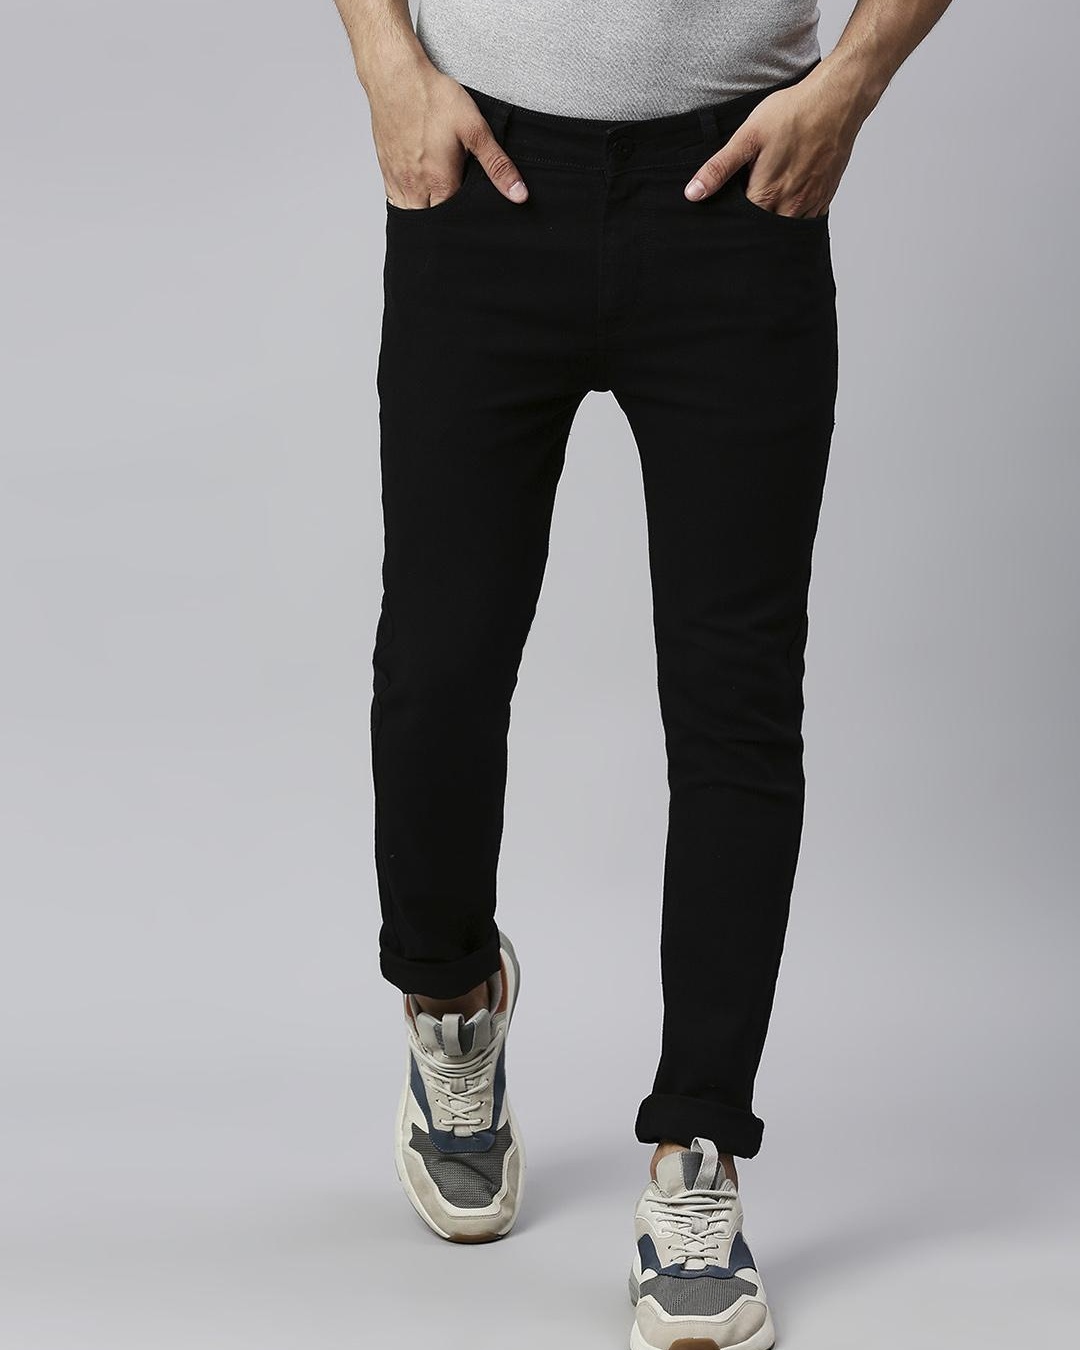 Buy Men's Black Slim Fit Jeans for Men Black Online at Bewakoof